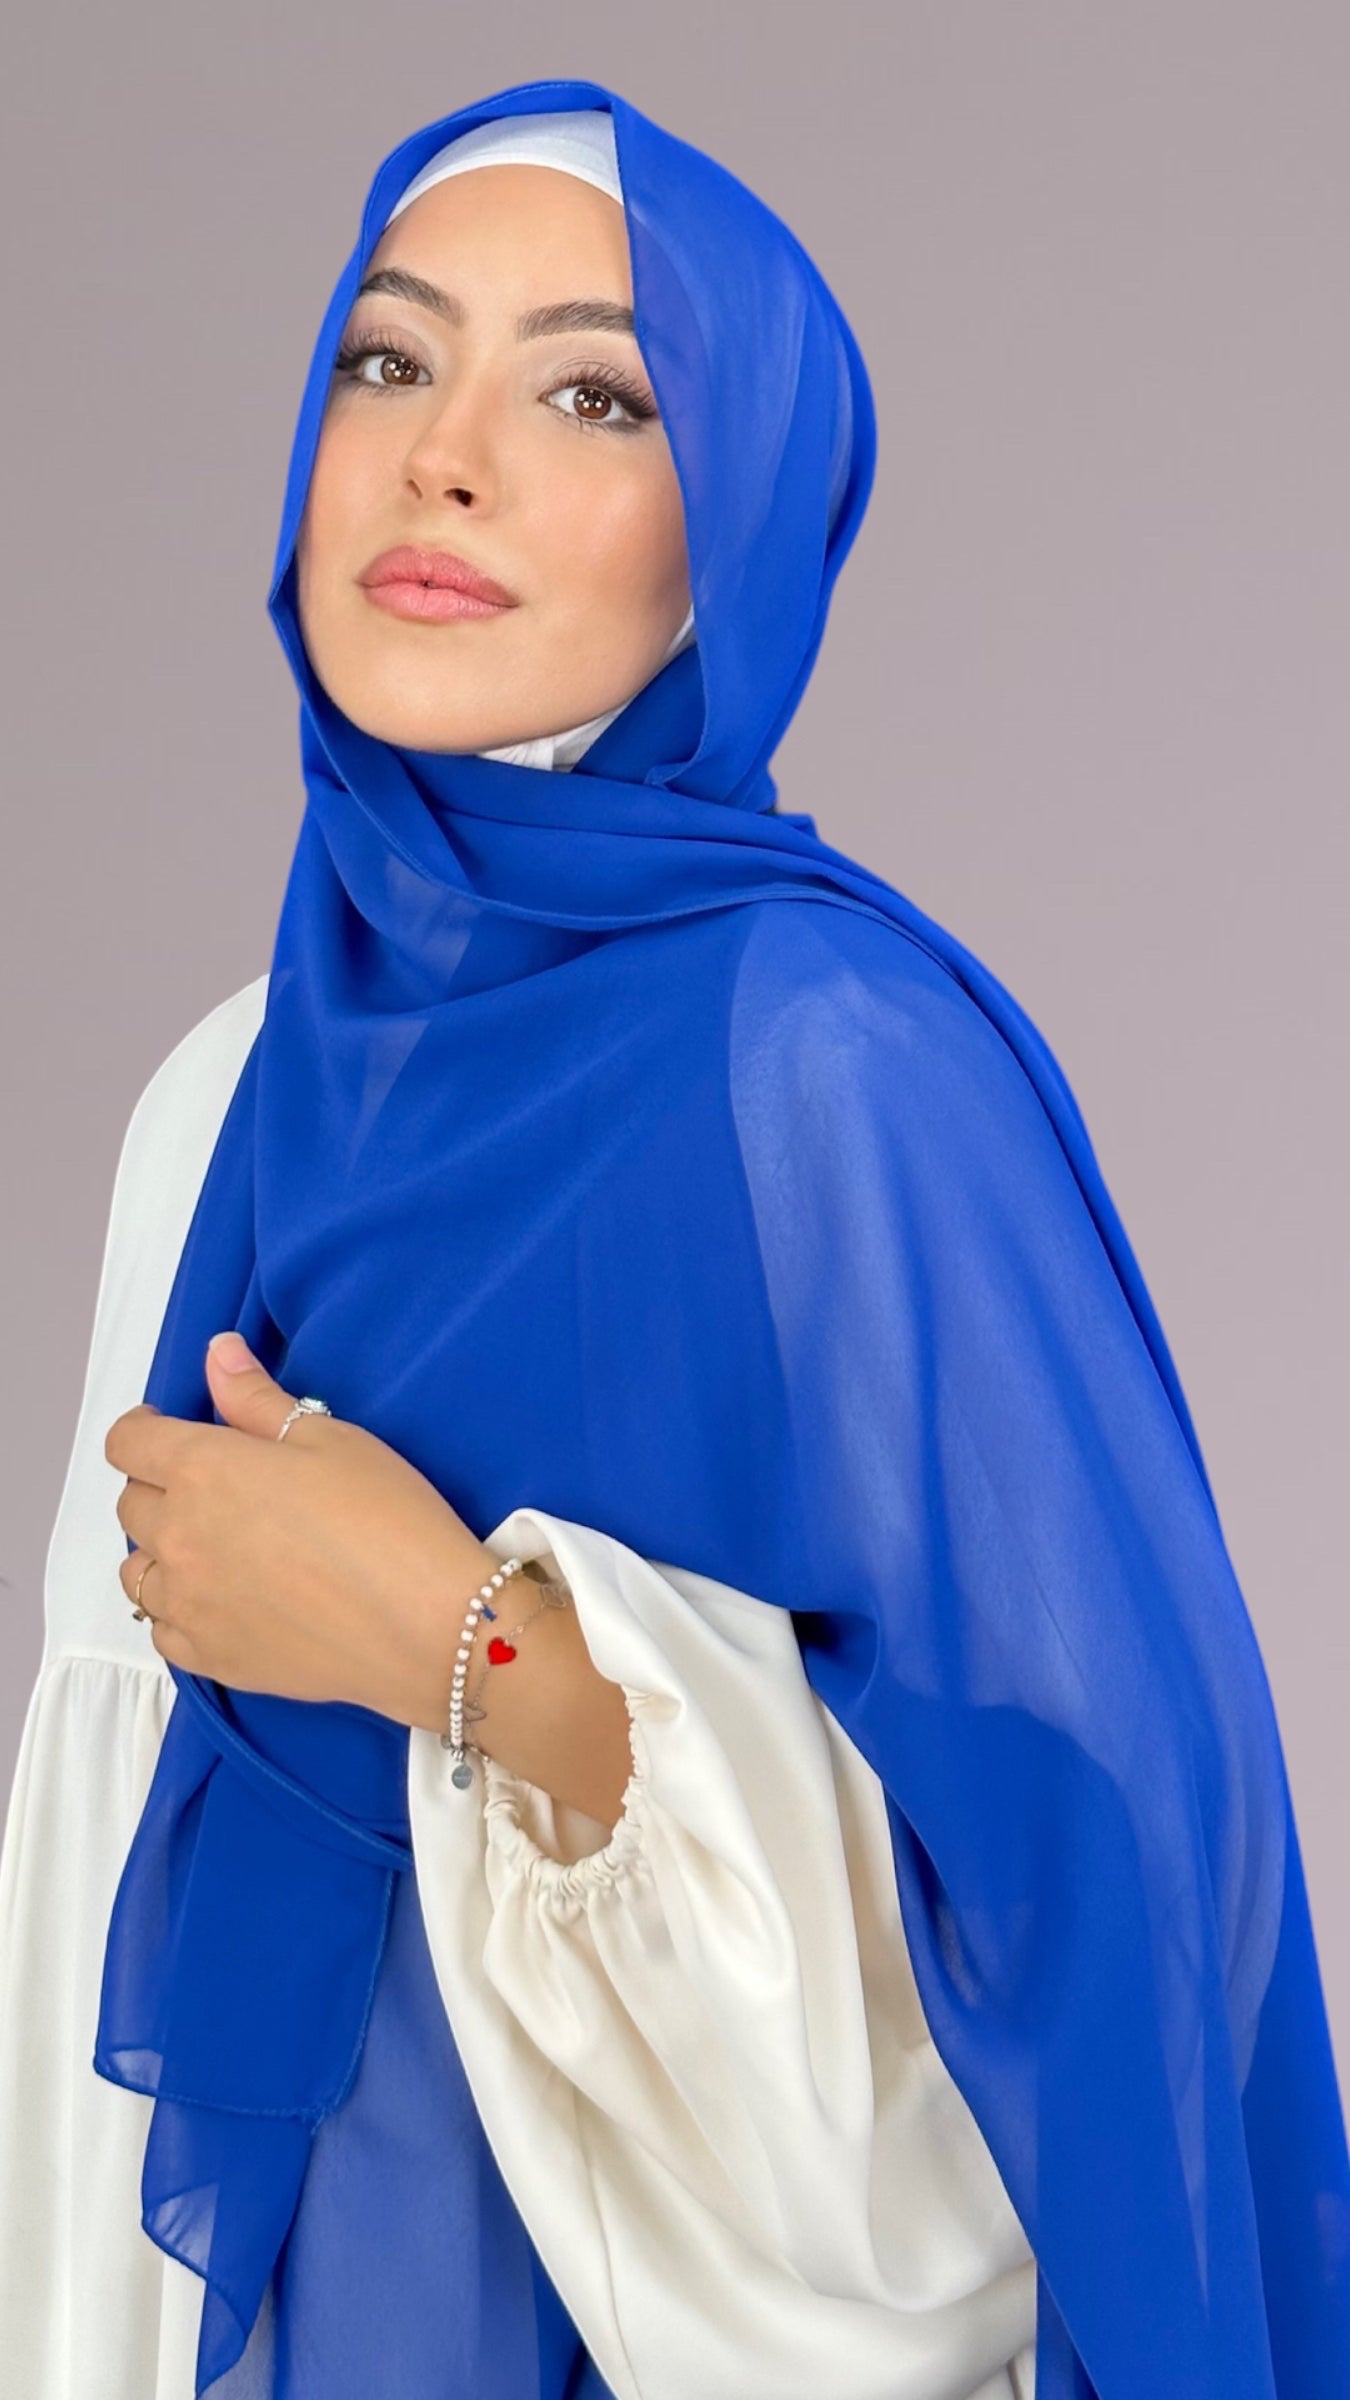 Hijab Chiffon Crepe blu elettrico - Hijab ParadiseHijab, chador, velo, turbante, foulard, copricapo, musulmano, islamico, sciarpa,  trasparente, chiffon crepe 